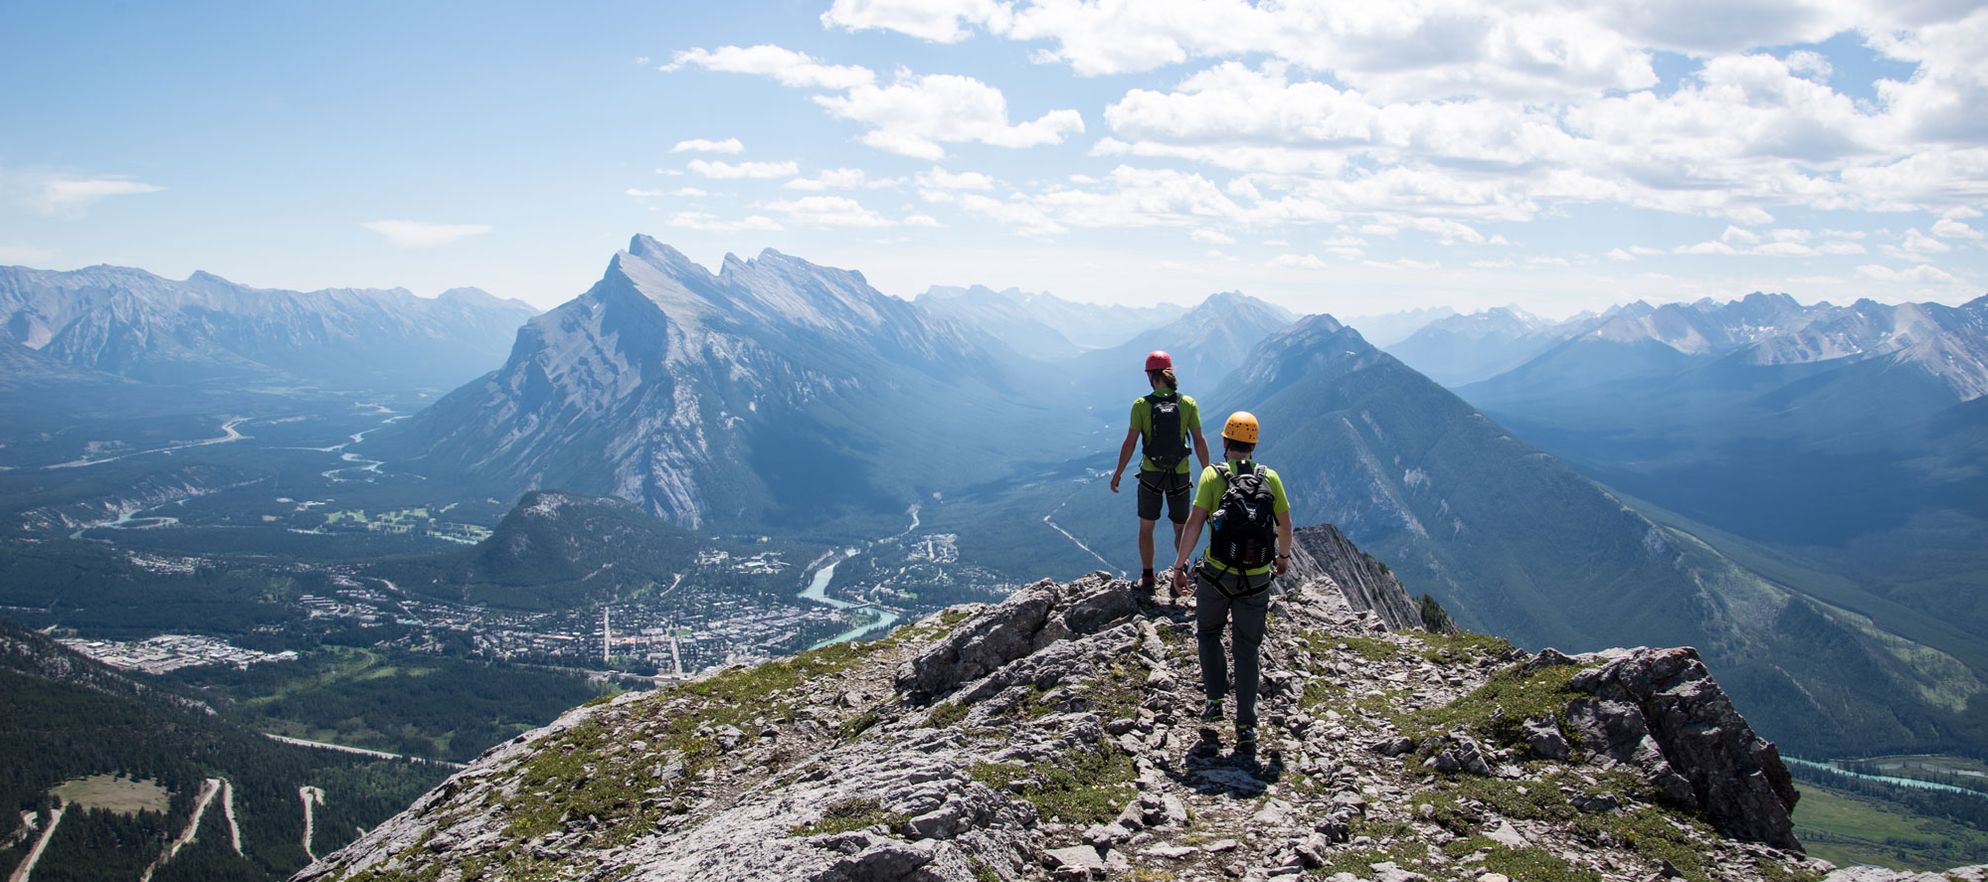 Climbers reach the summit of the Mt. Norquay Via Ferrata, Banff National Park, AB